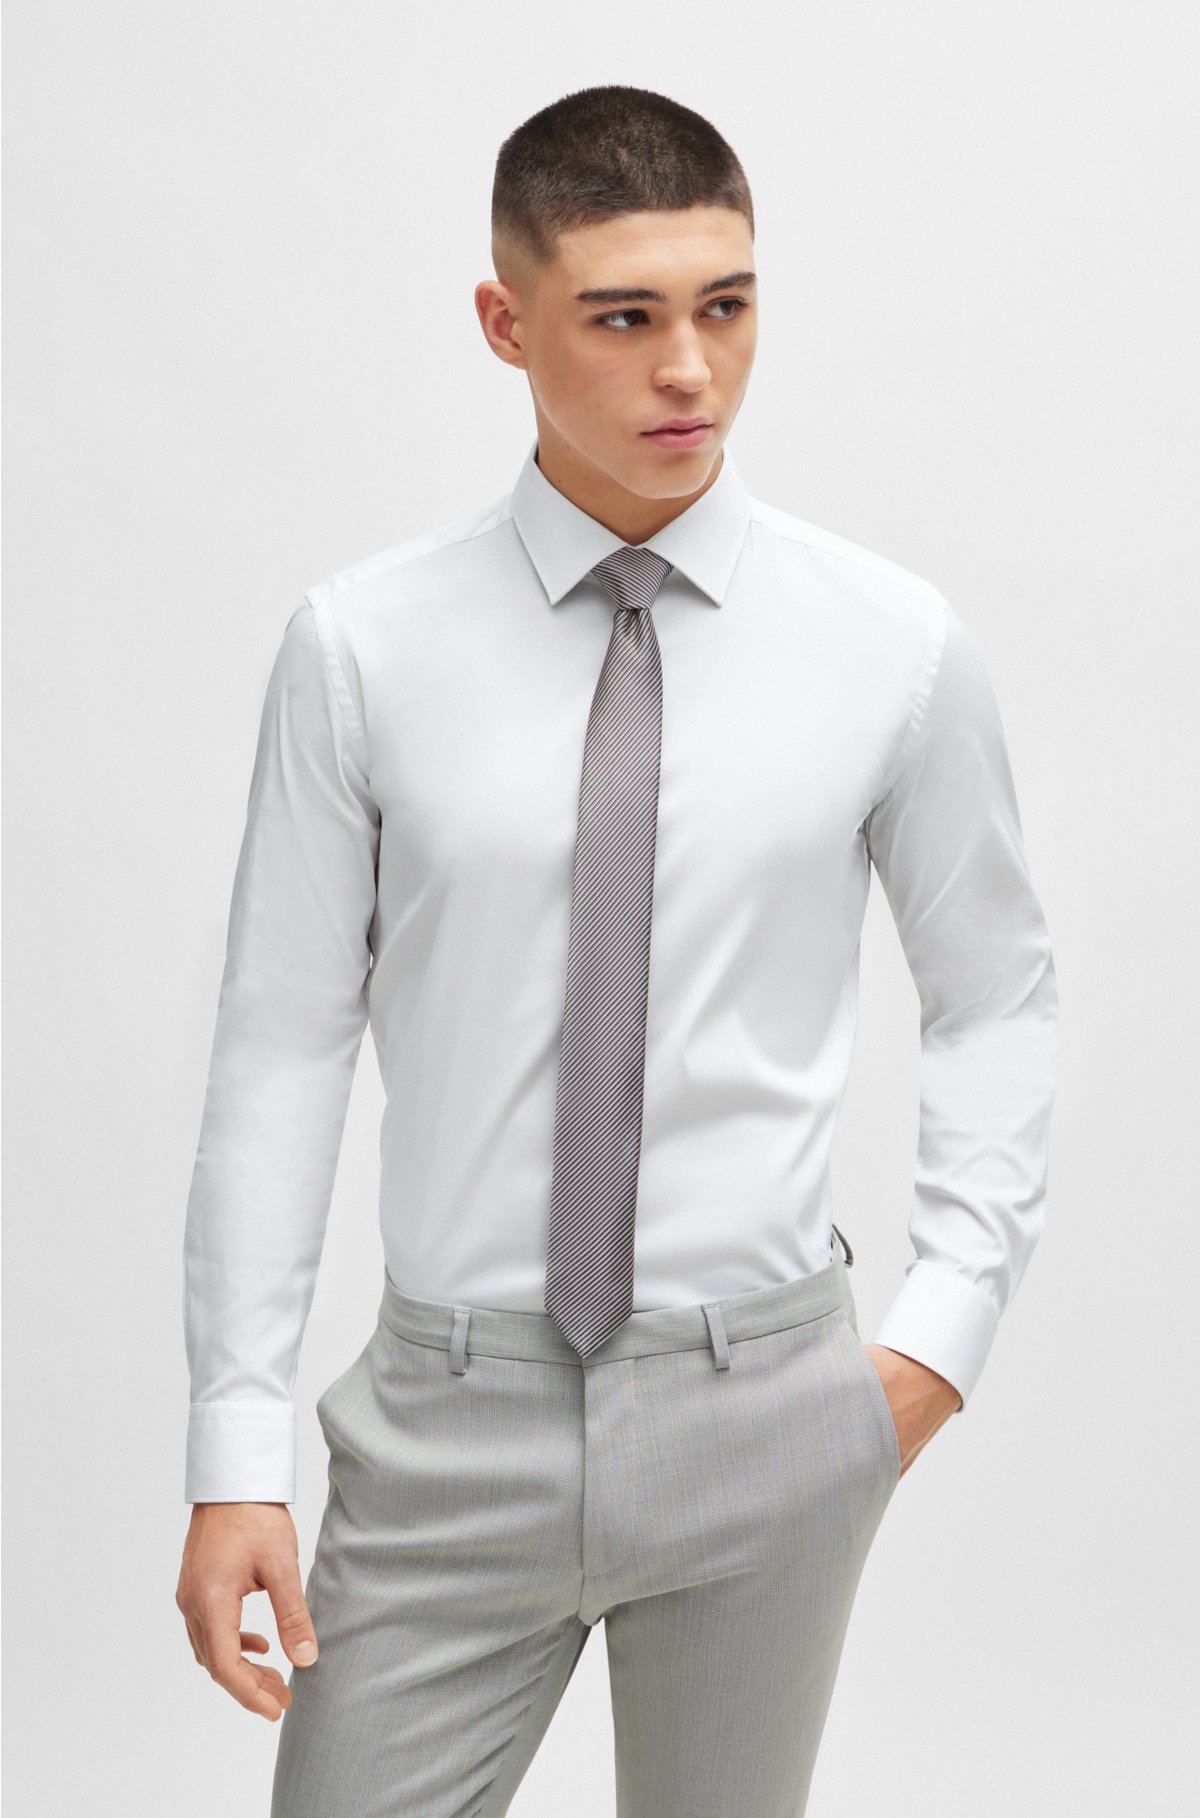 Slim-fit shirt in cotton-blend poplin, White